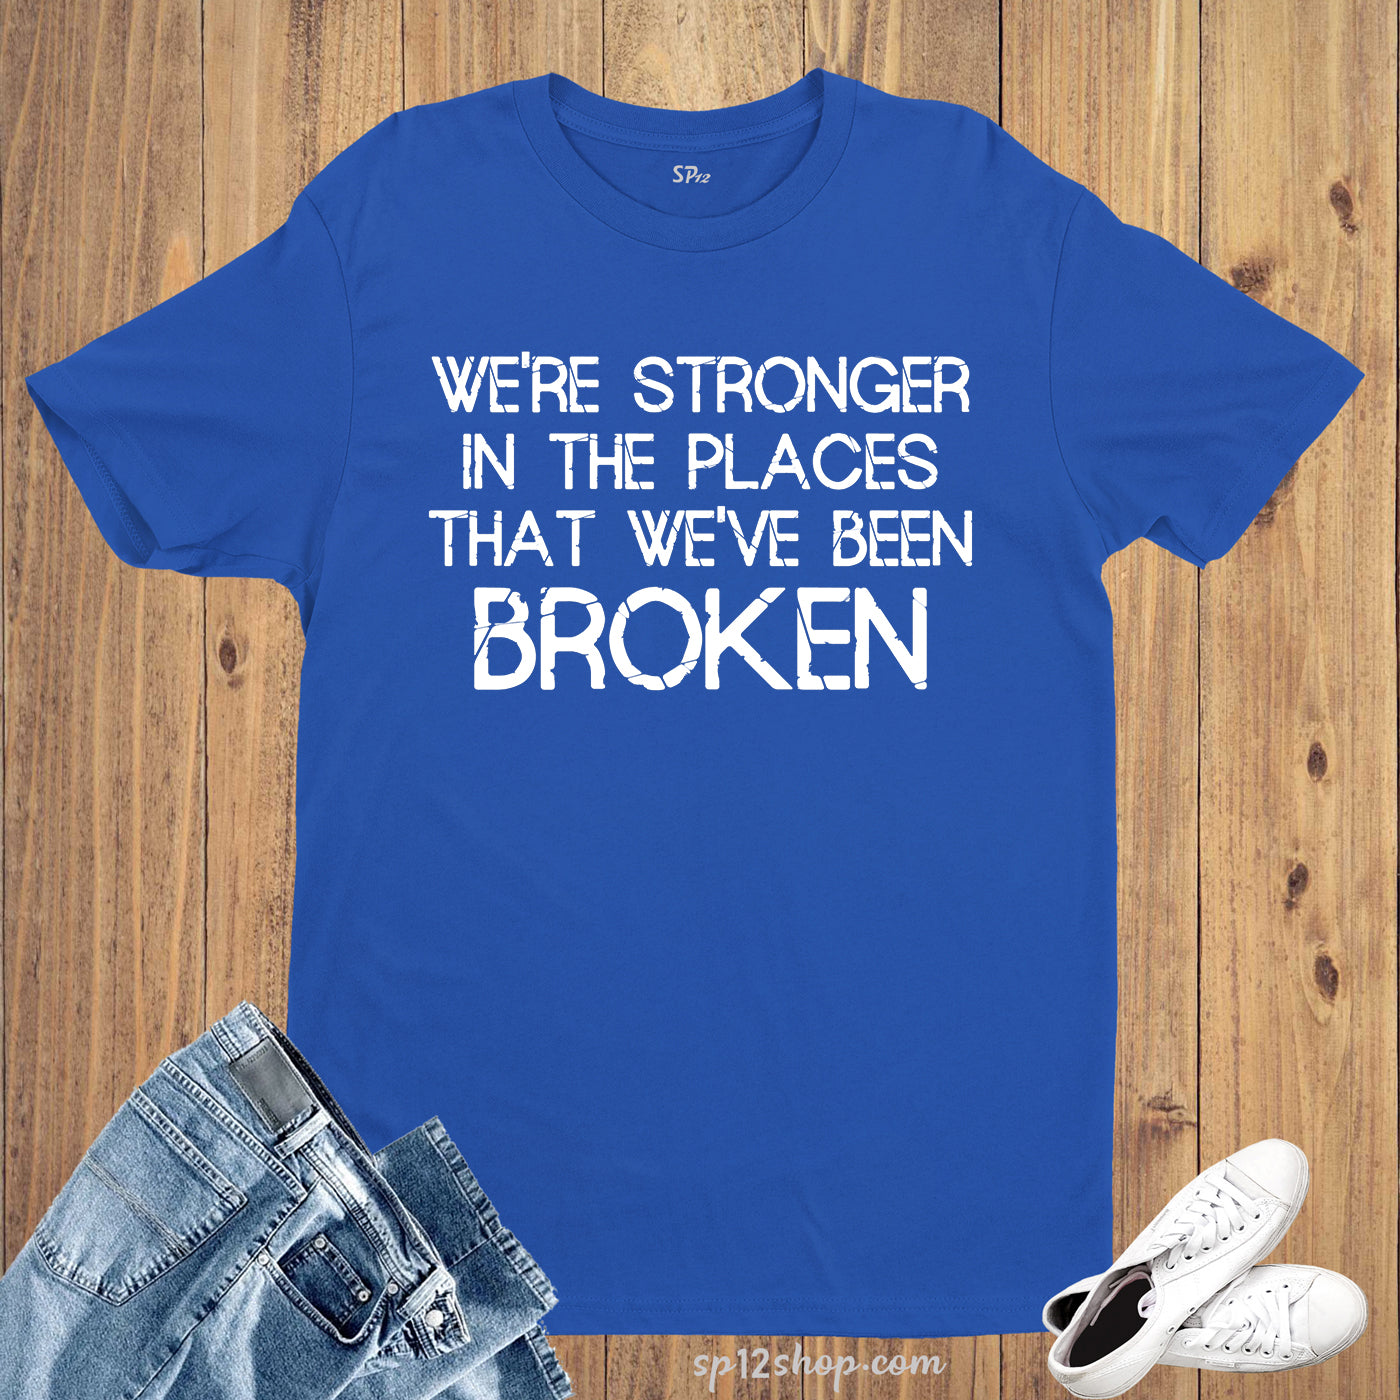 Broken but Stronger Witty Quote Slogan T shirt